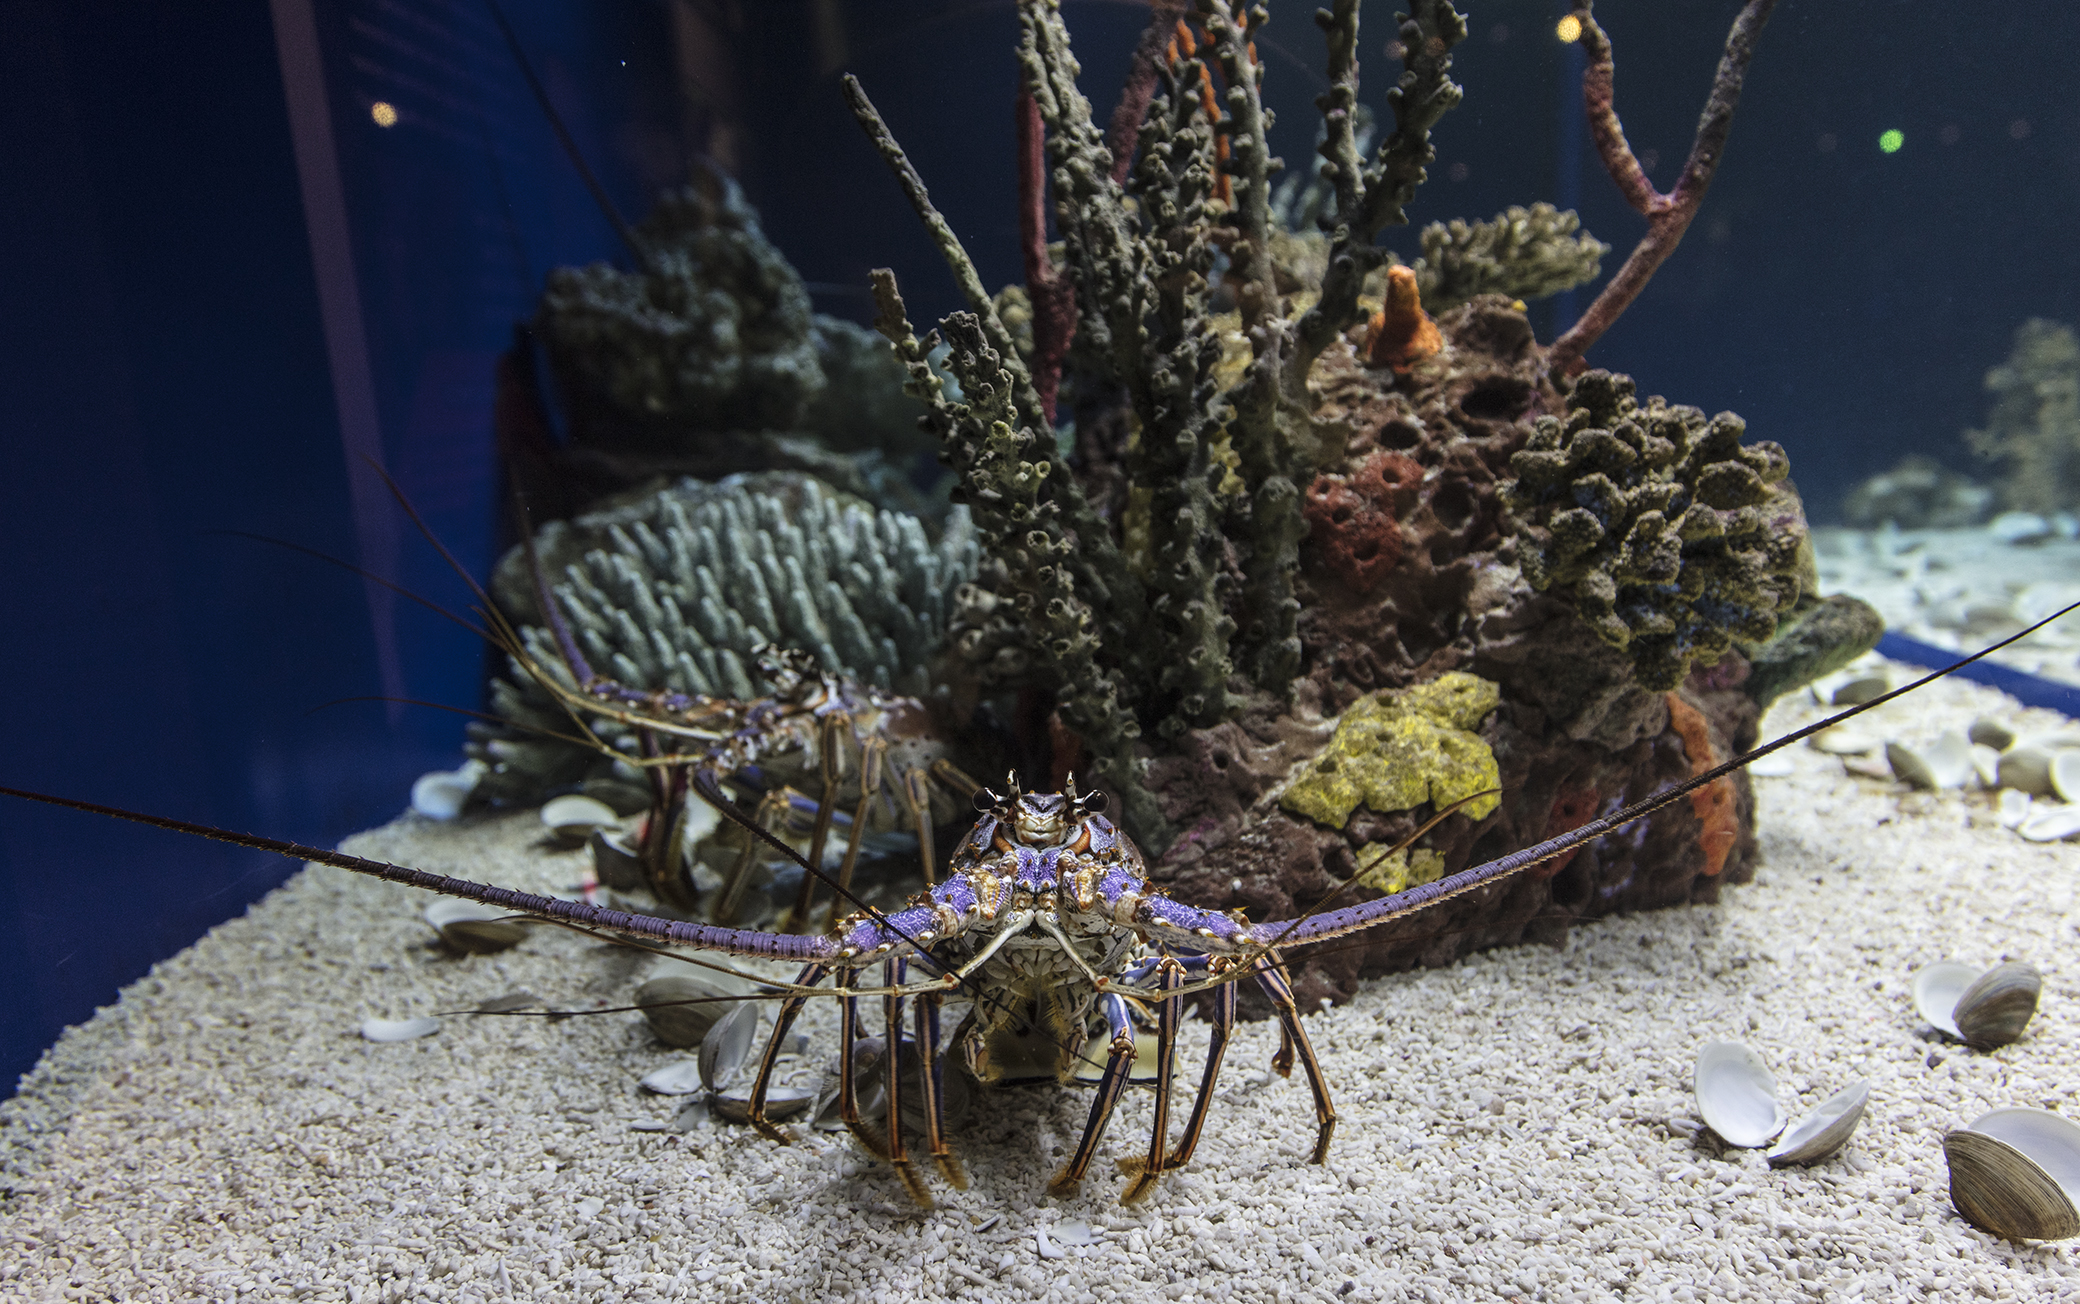 Underwater life at Ripley's Aquarium in Myrtle Beach, South Carolina